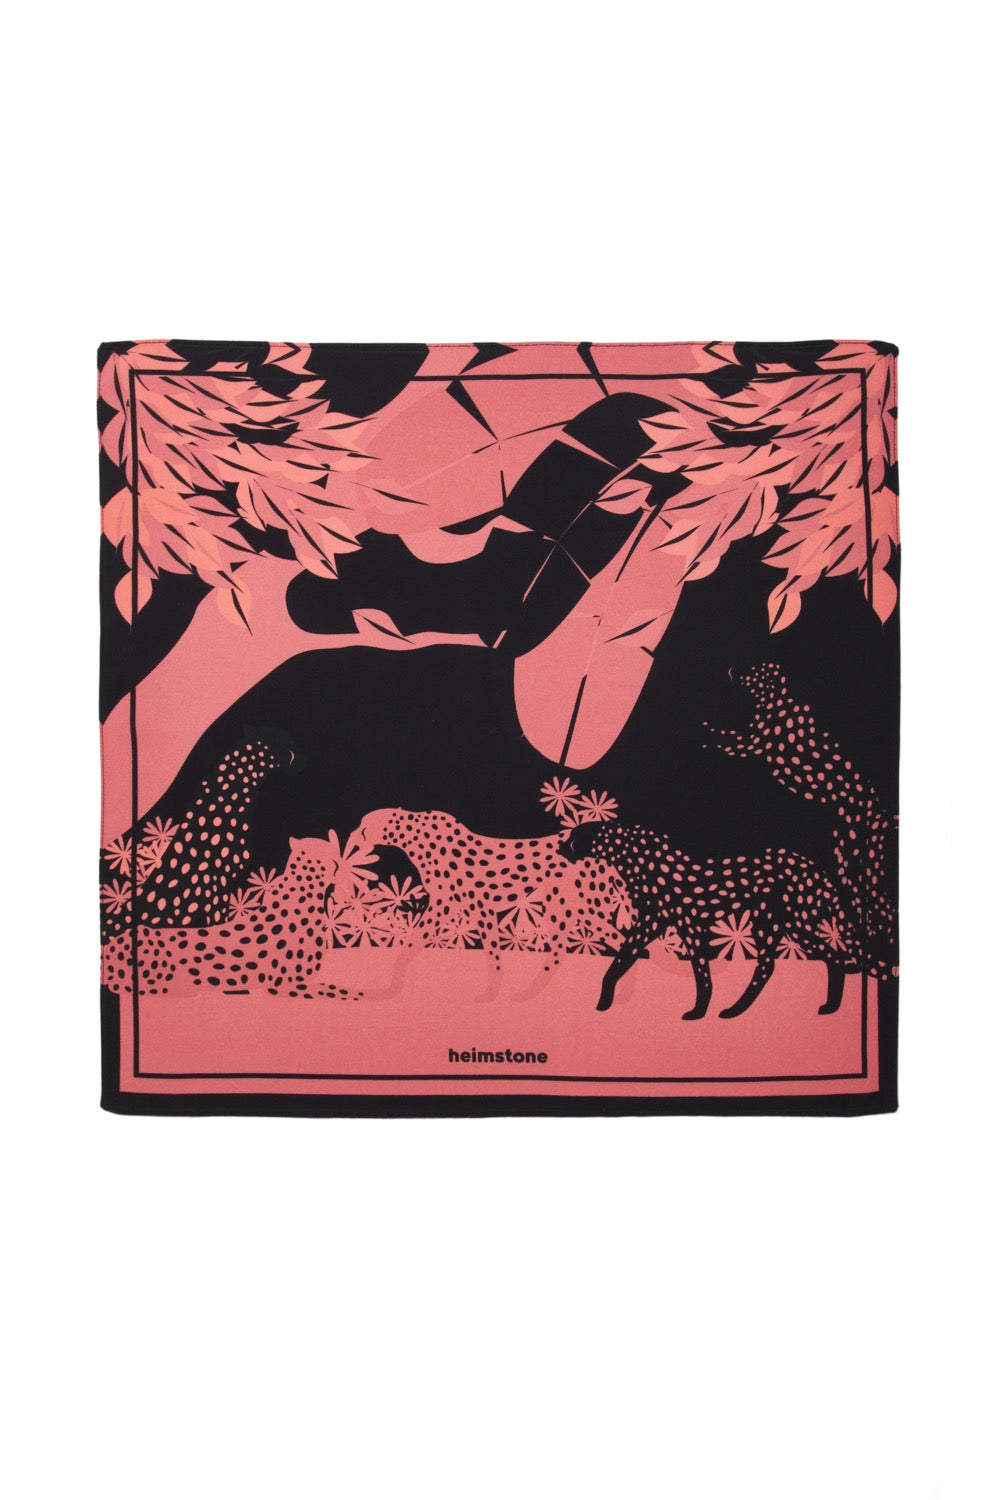 Le Baume - Sensory kit pink Leopard